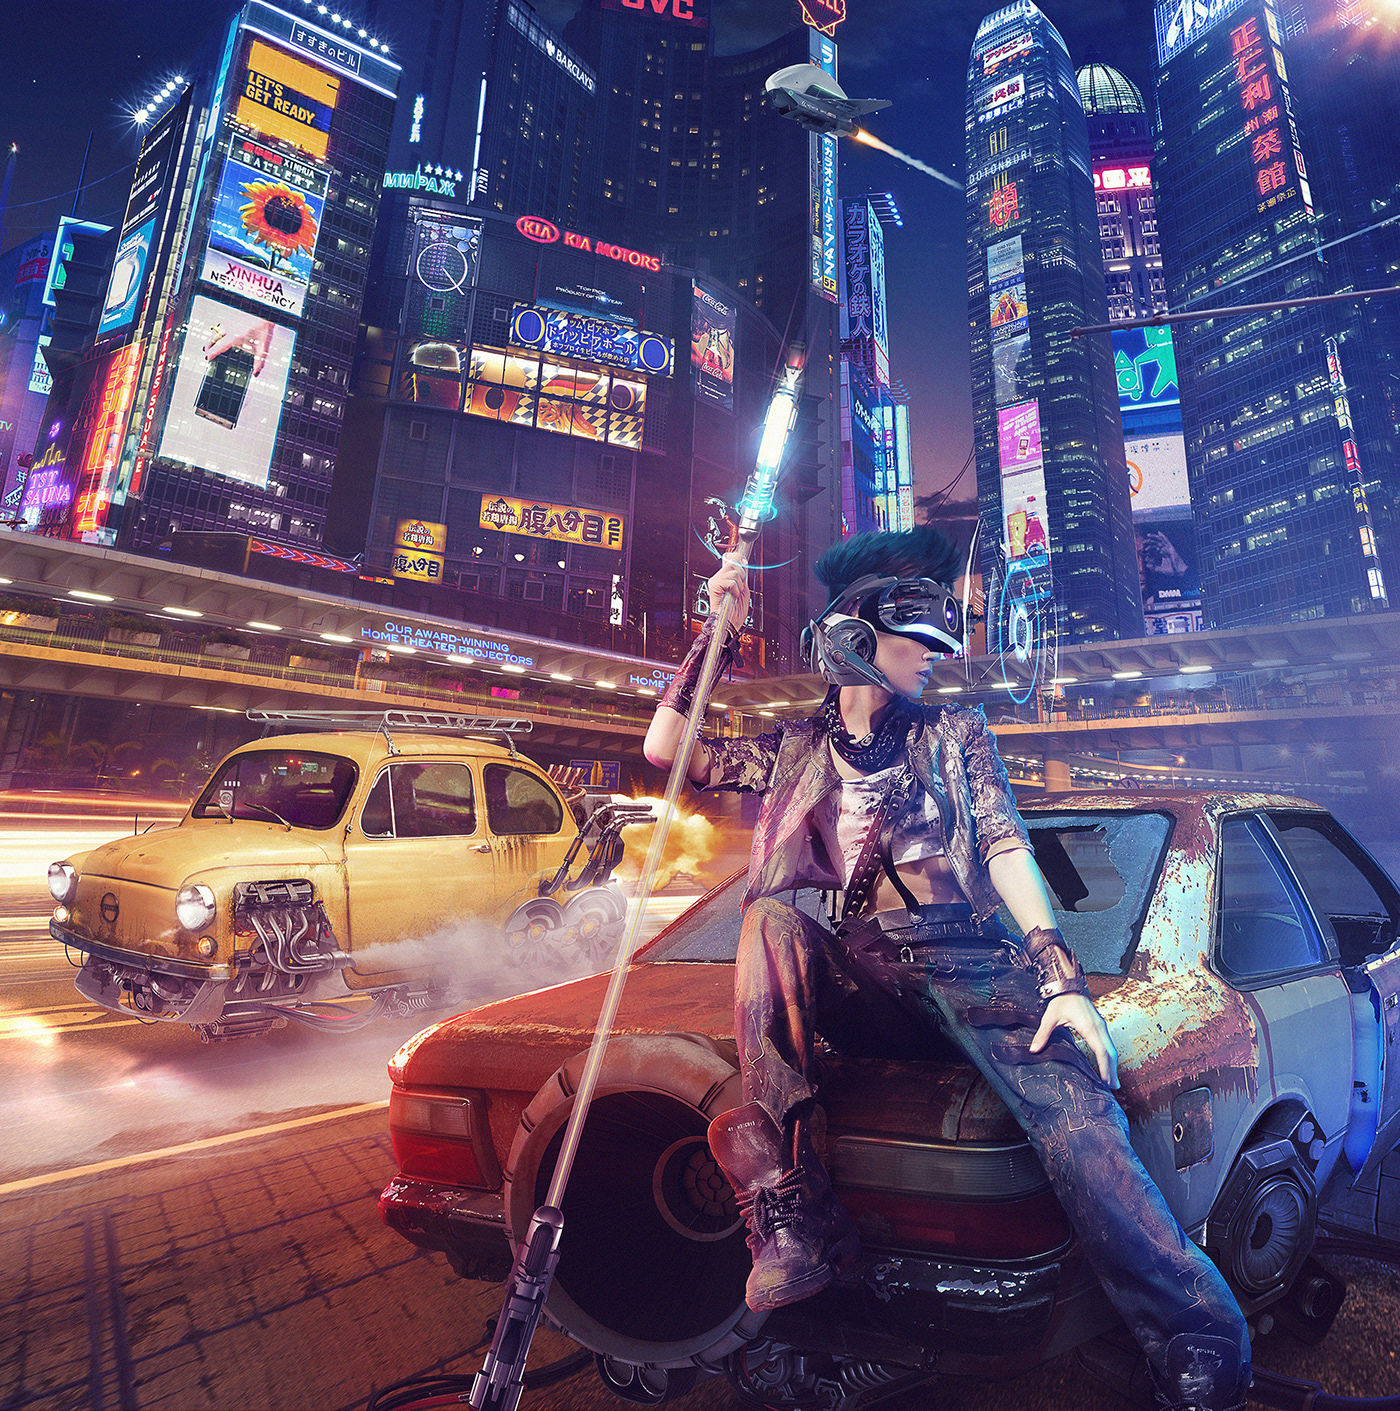 Cyberpunk sci-fi future city Photo Manipulation  Digital Art  dubai car retouch NEO